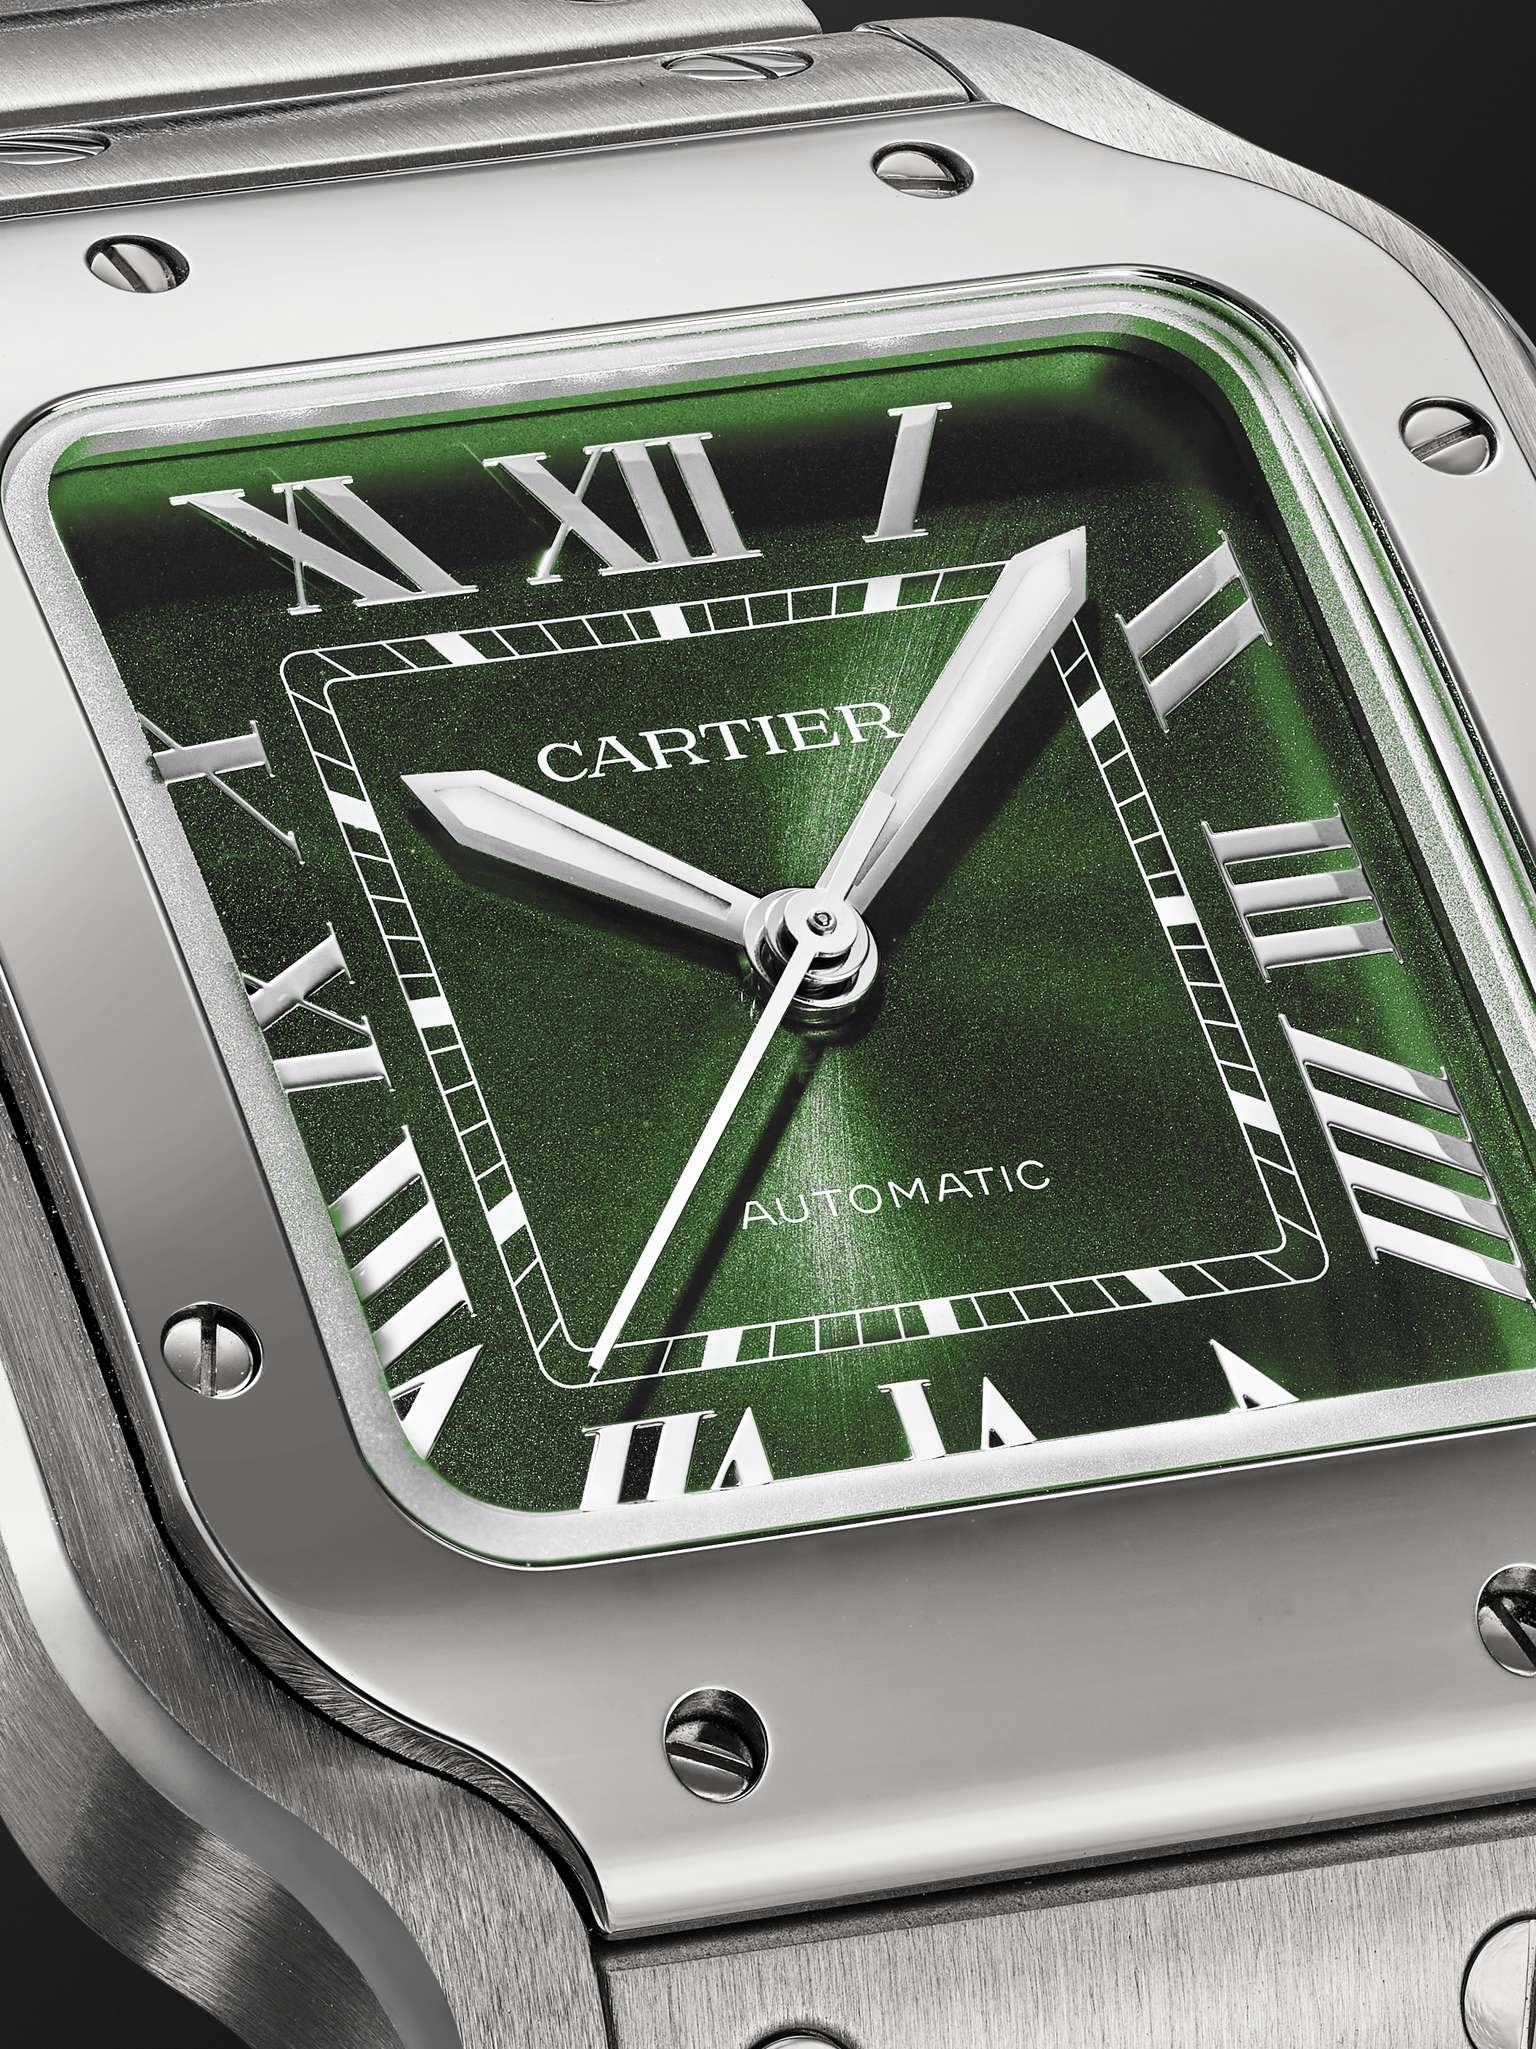 Santos de Cartier Automatic 35.1mm Interchangeable Stainless Steel and Alligator Watch, Ref. No. CRW - 5